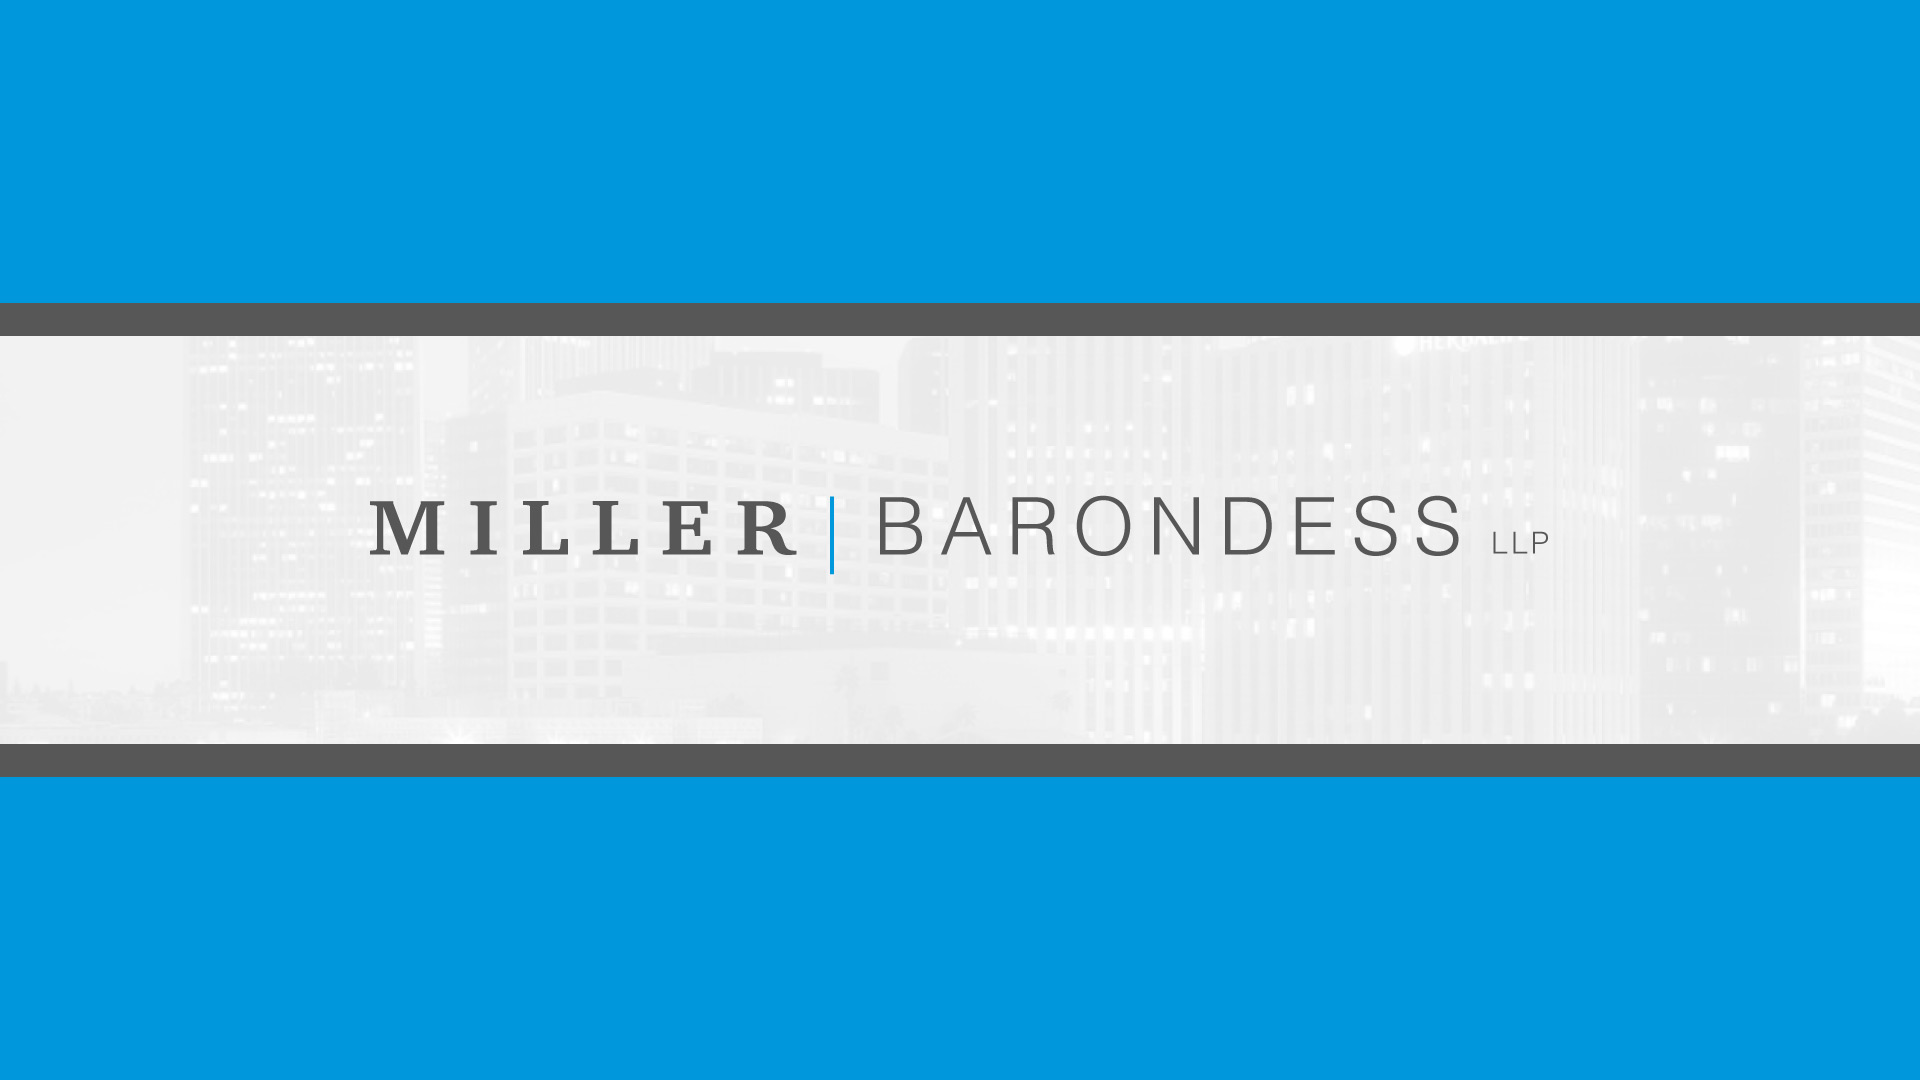 Miller Barondess LLP